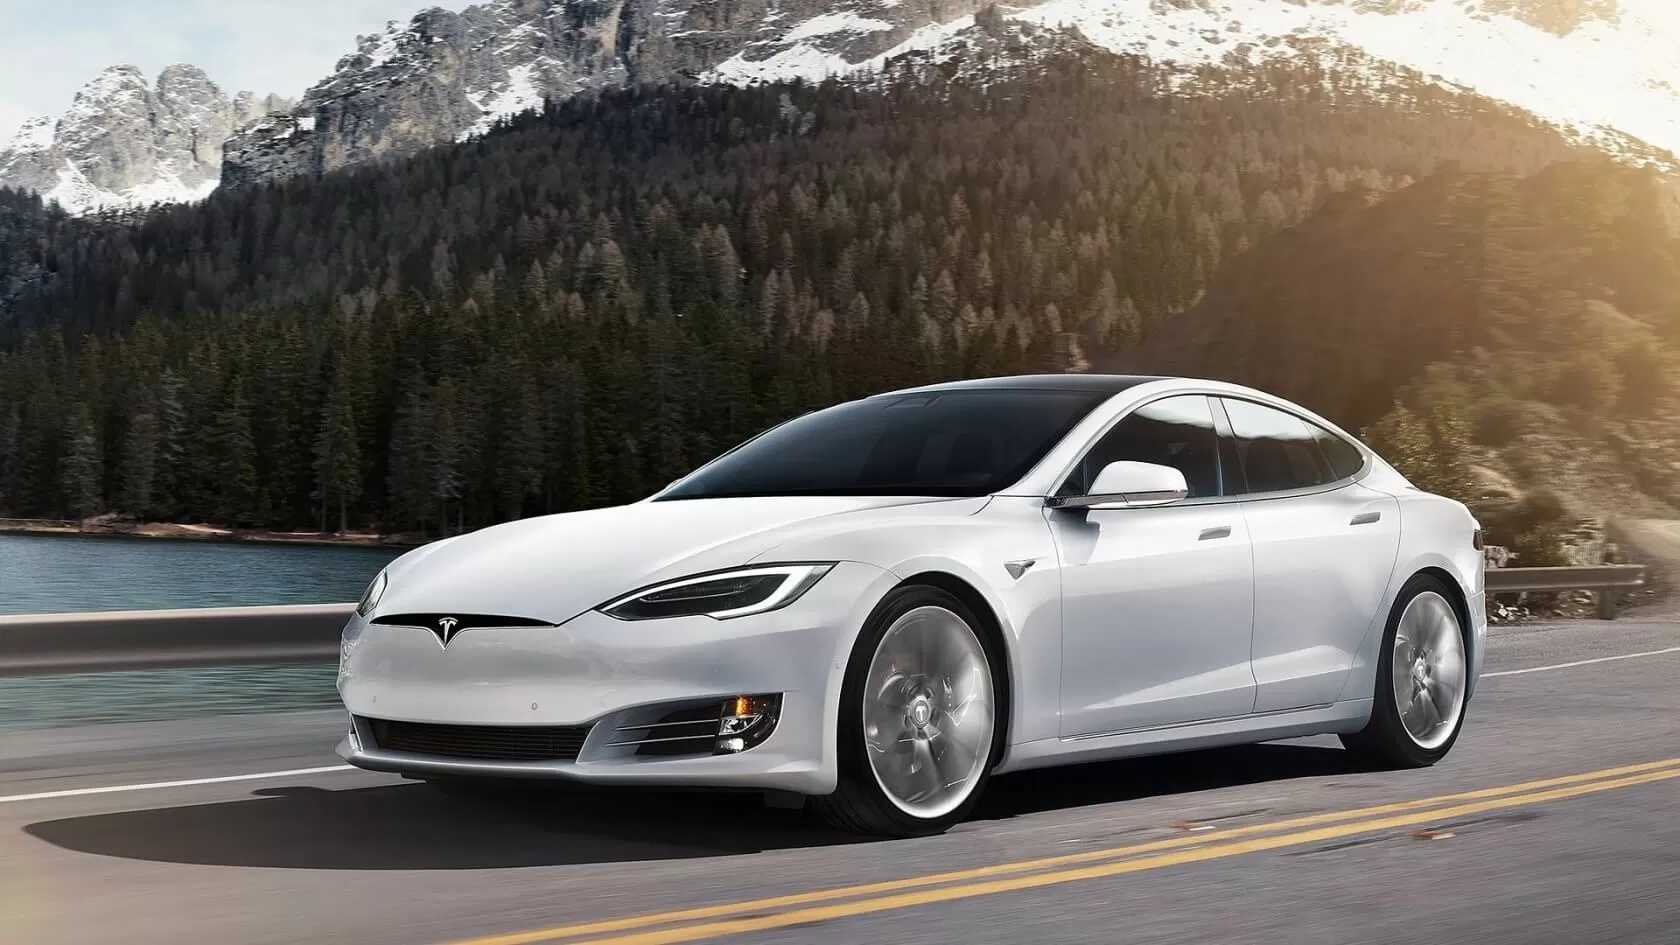 Tesla's best Model X and Model S vehicles receive major price cuts